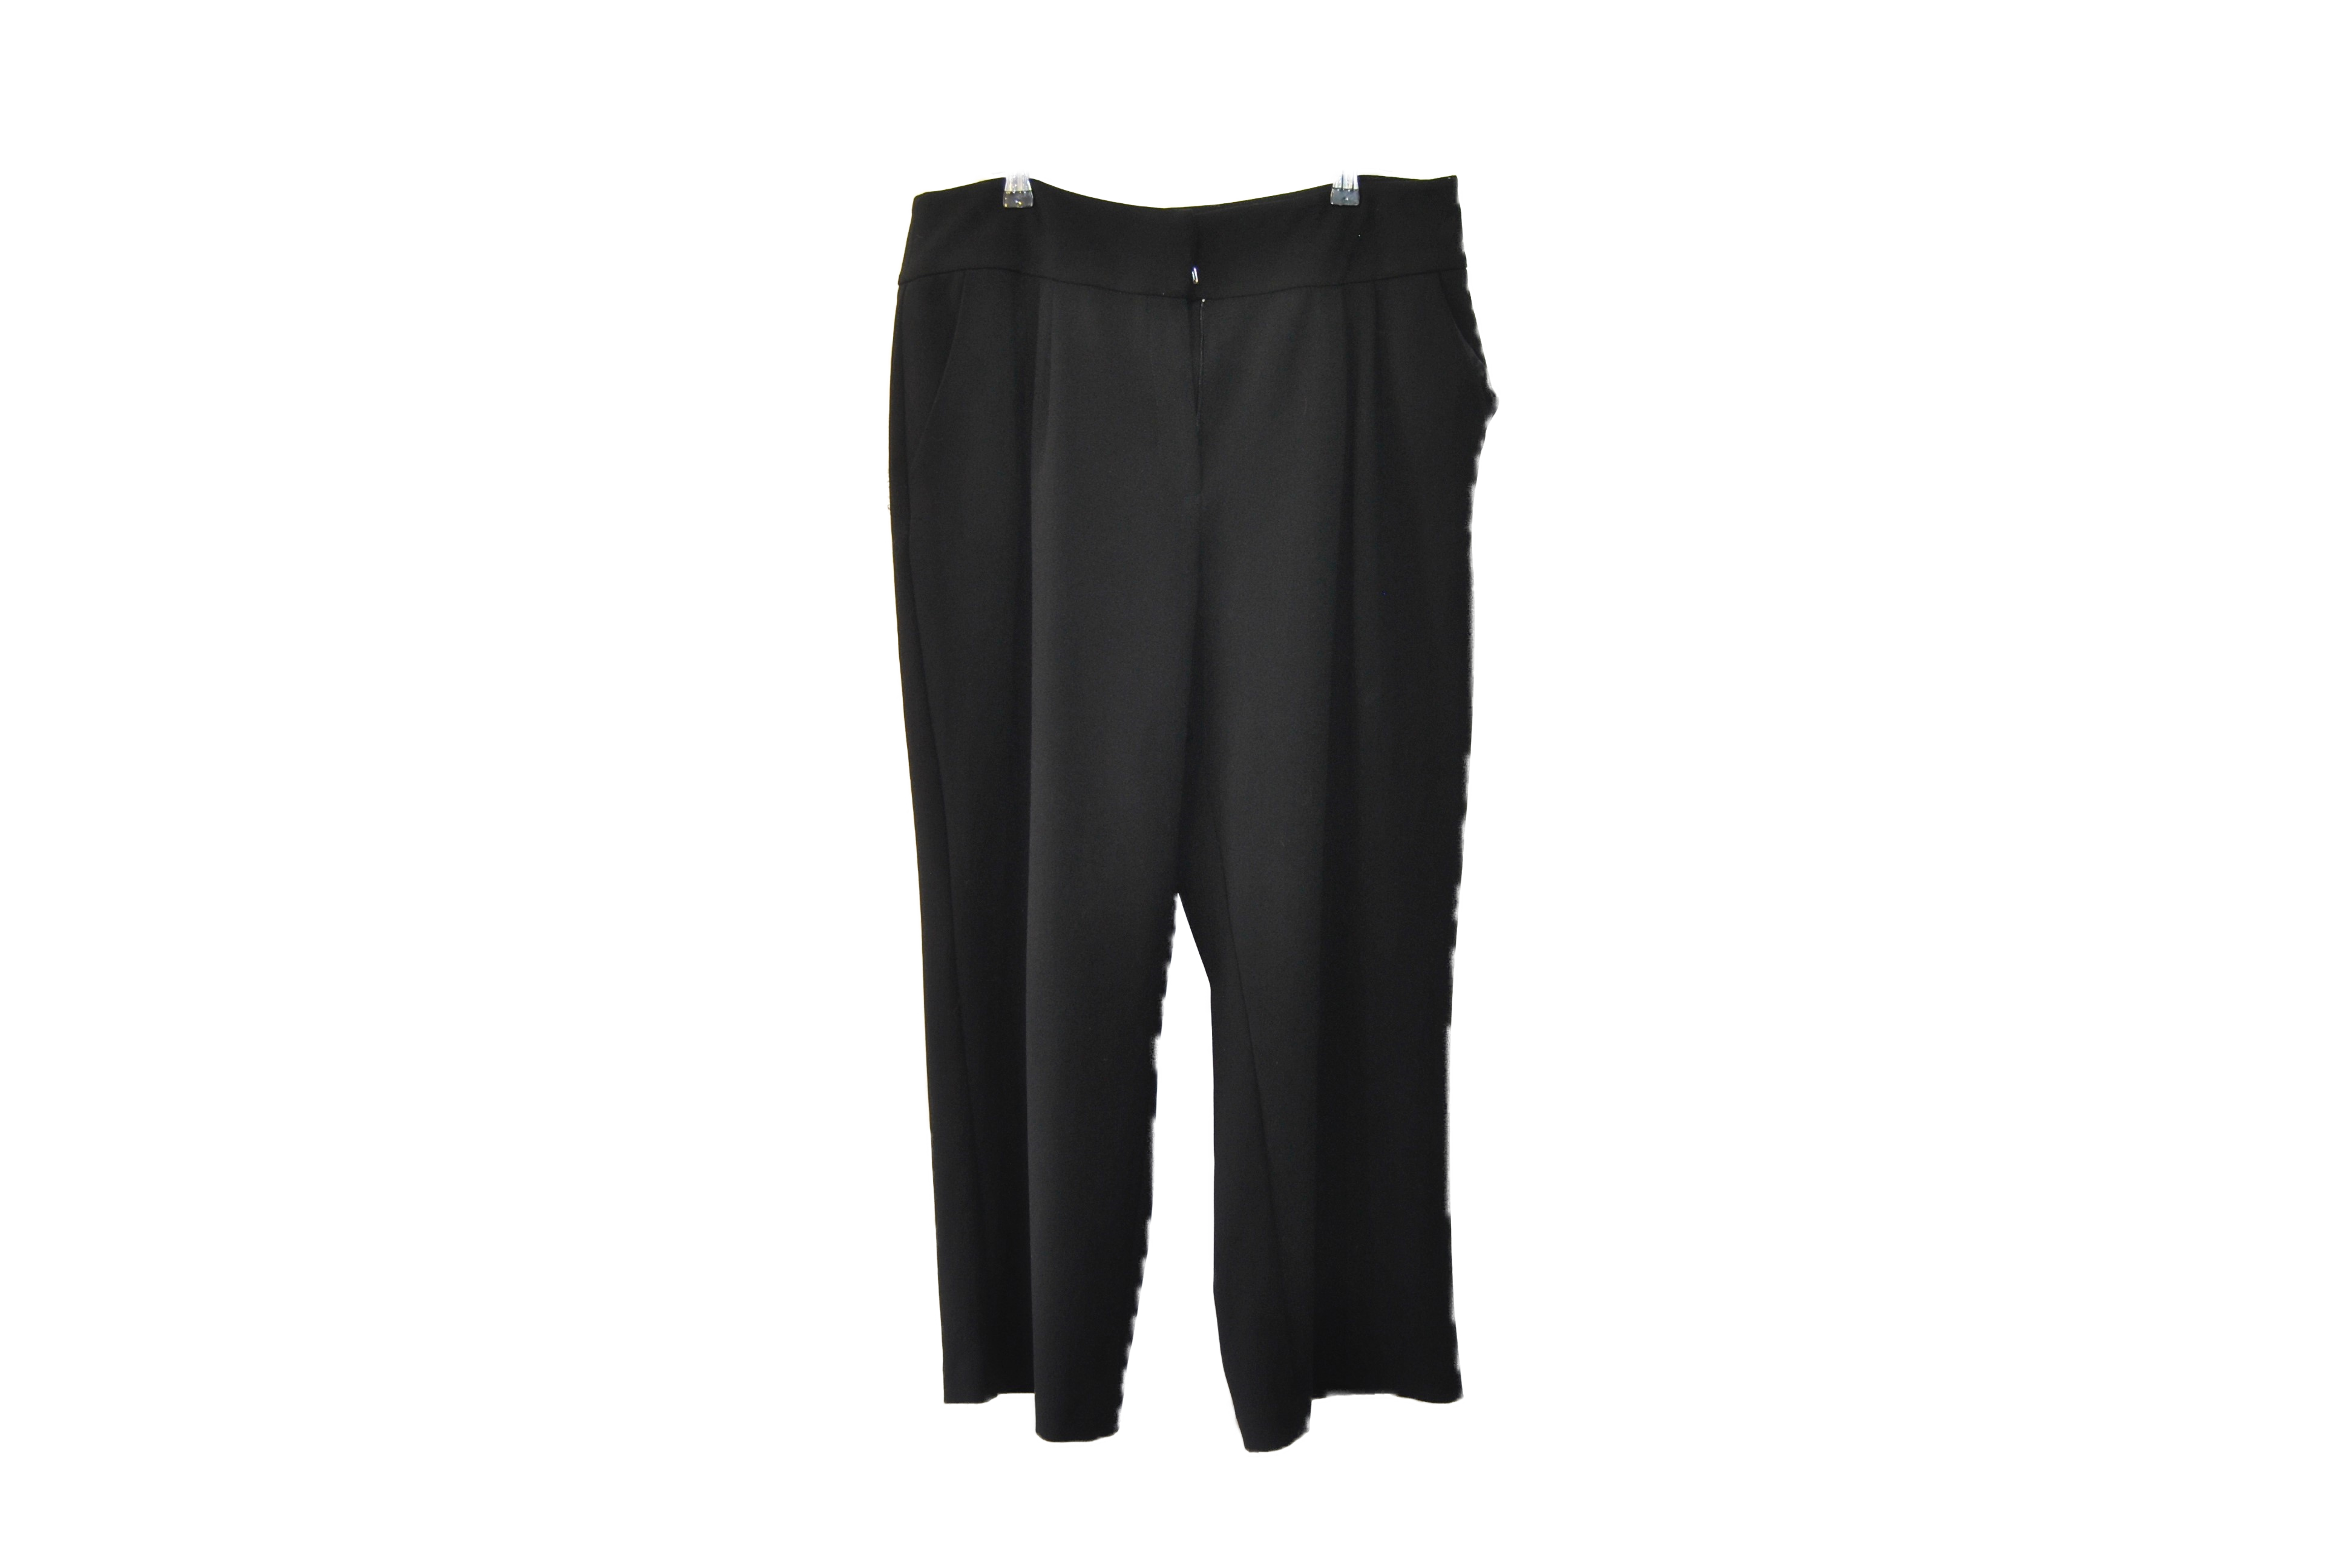 Pantalon Nina Kalio, taille 44 27,60 €